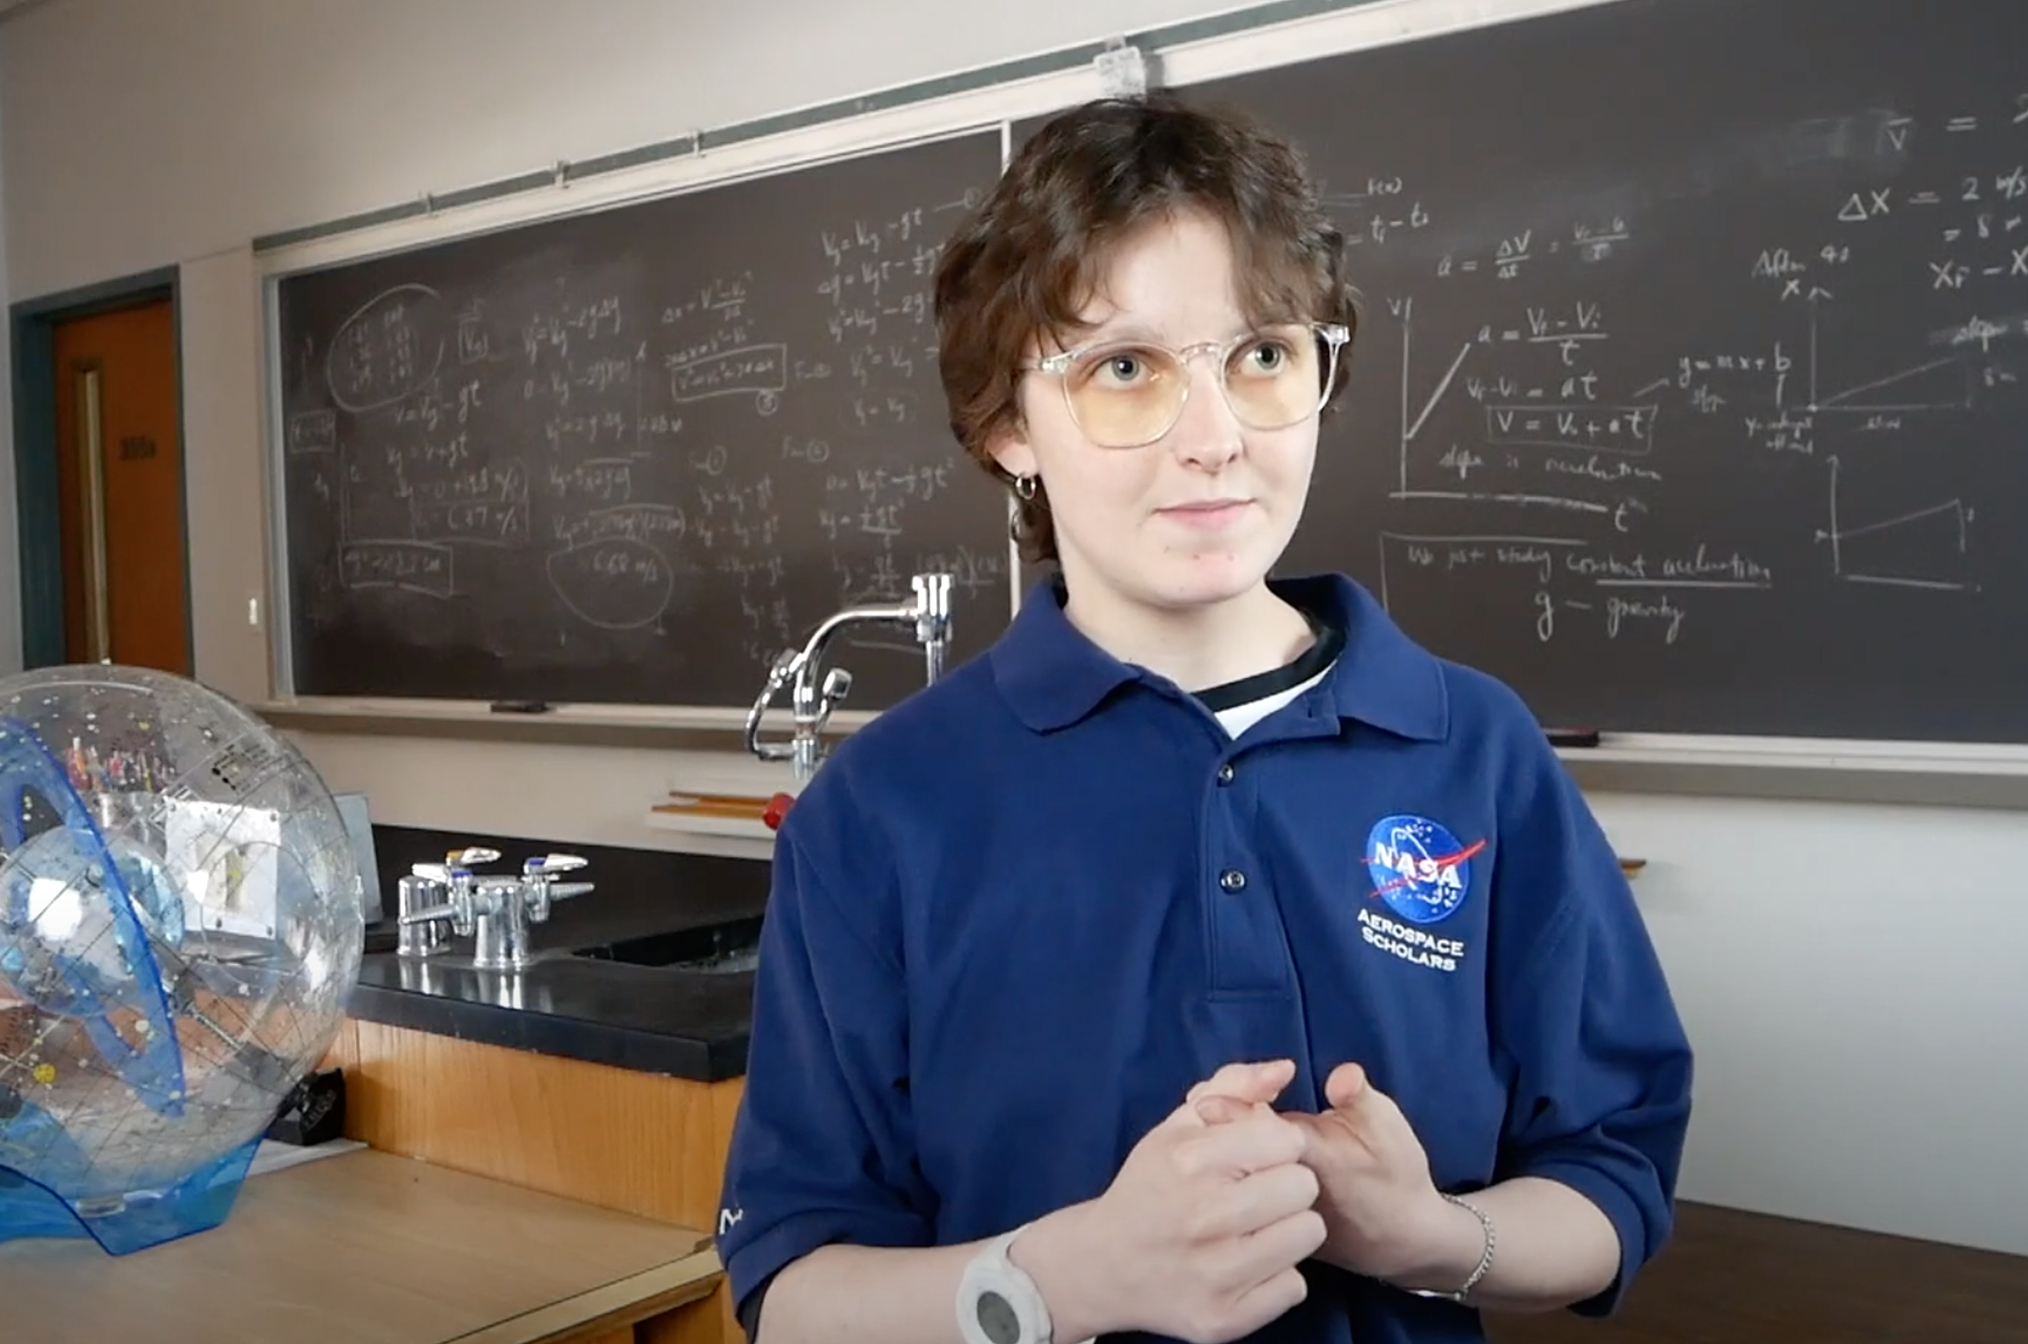 Eva Sweeney wears a NASA polo in a classroom